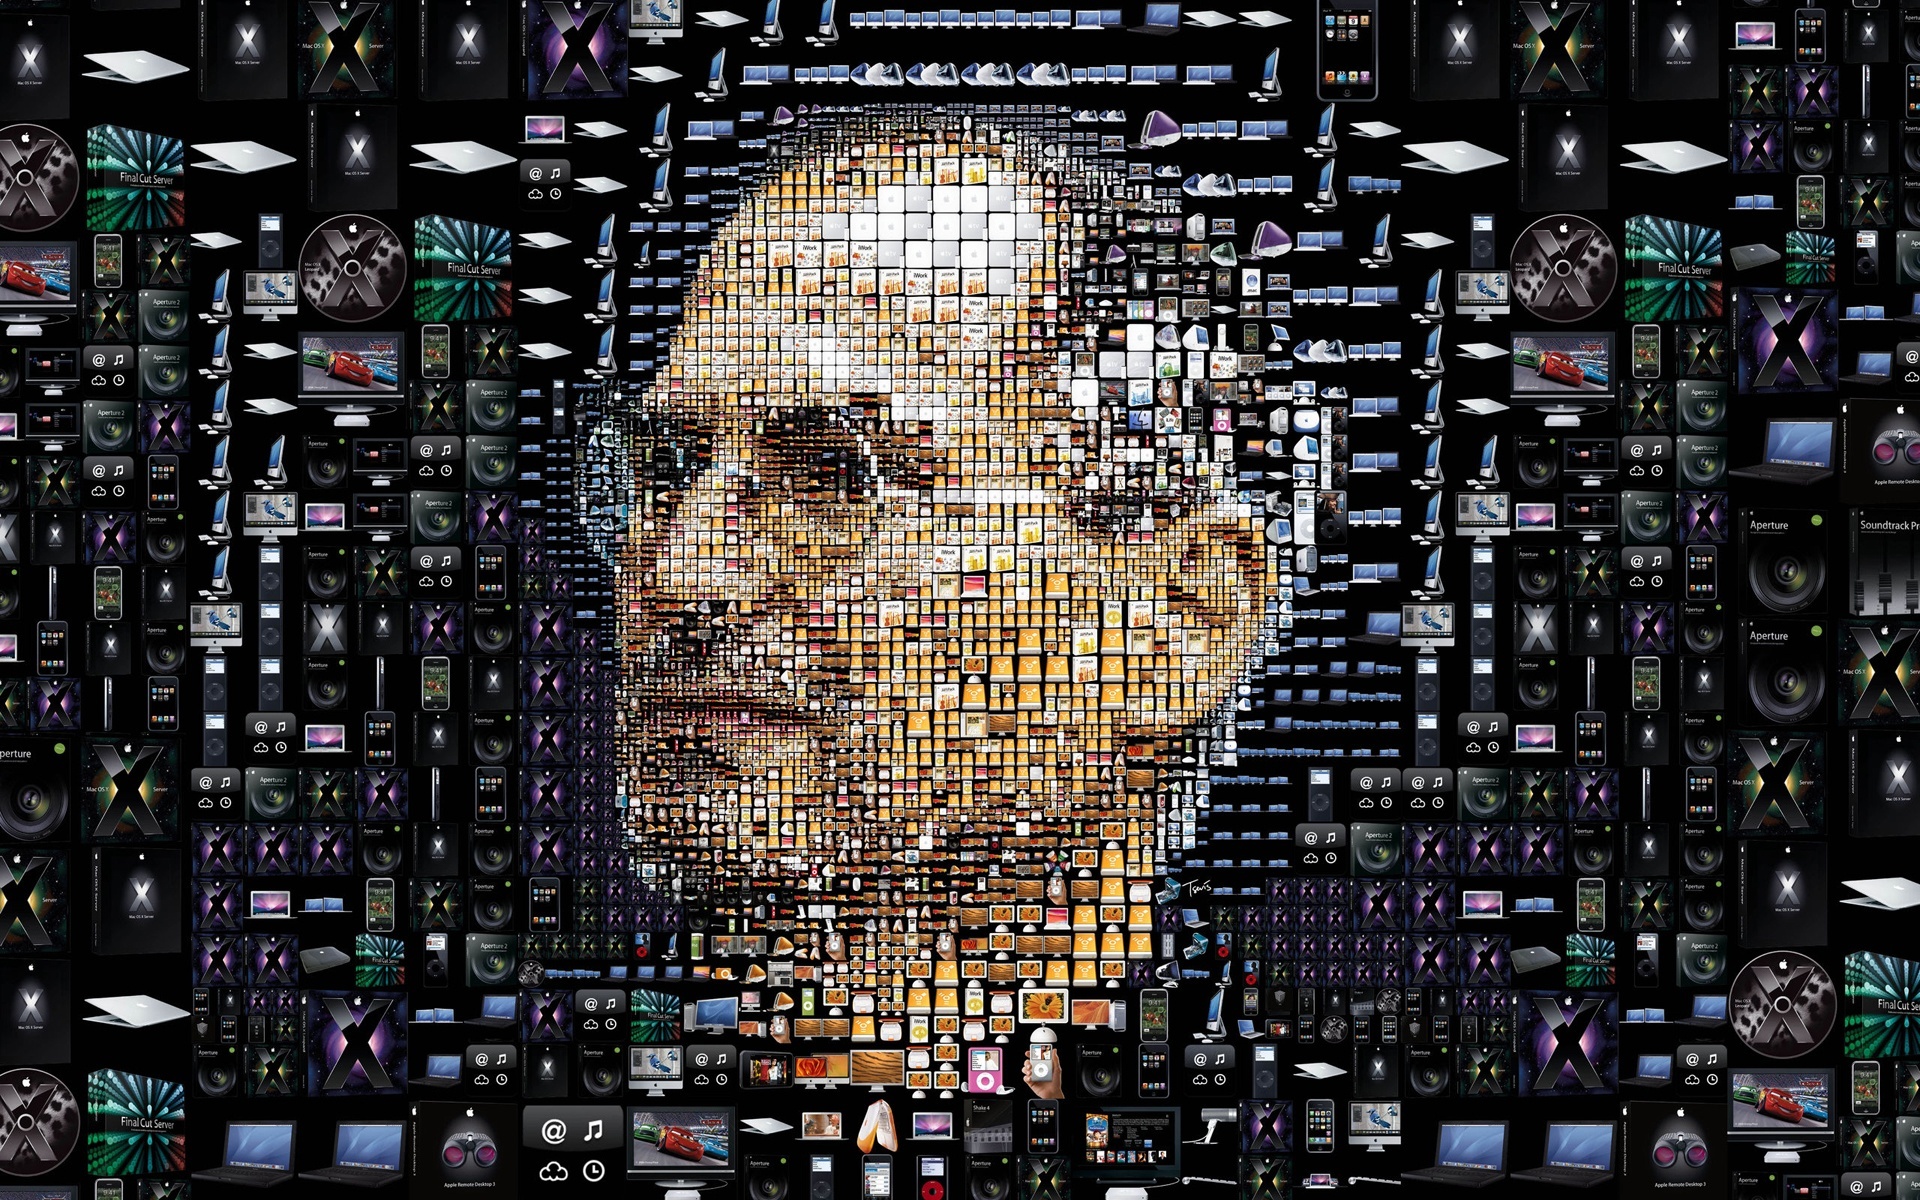 Steve Jobs Commemorative Wallpaper